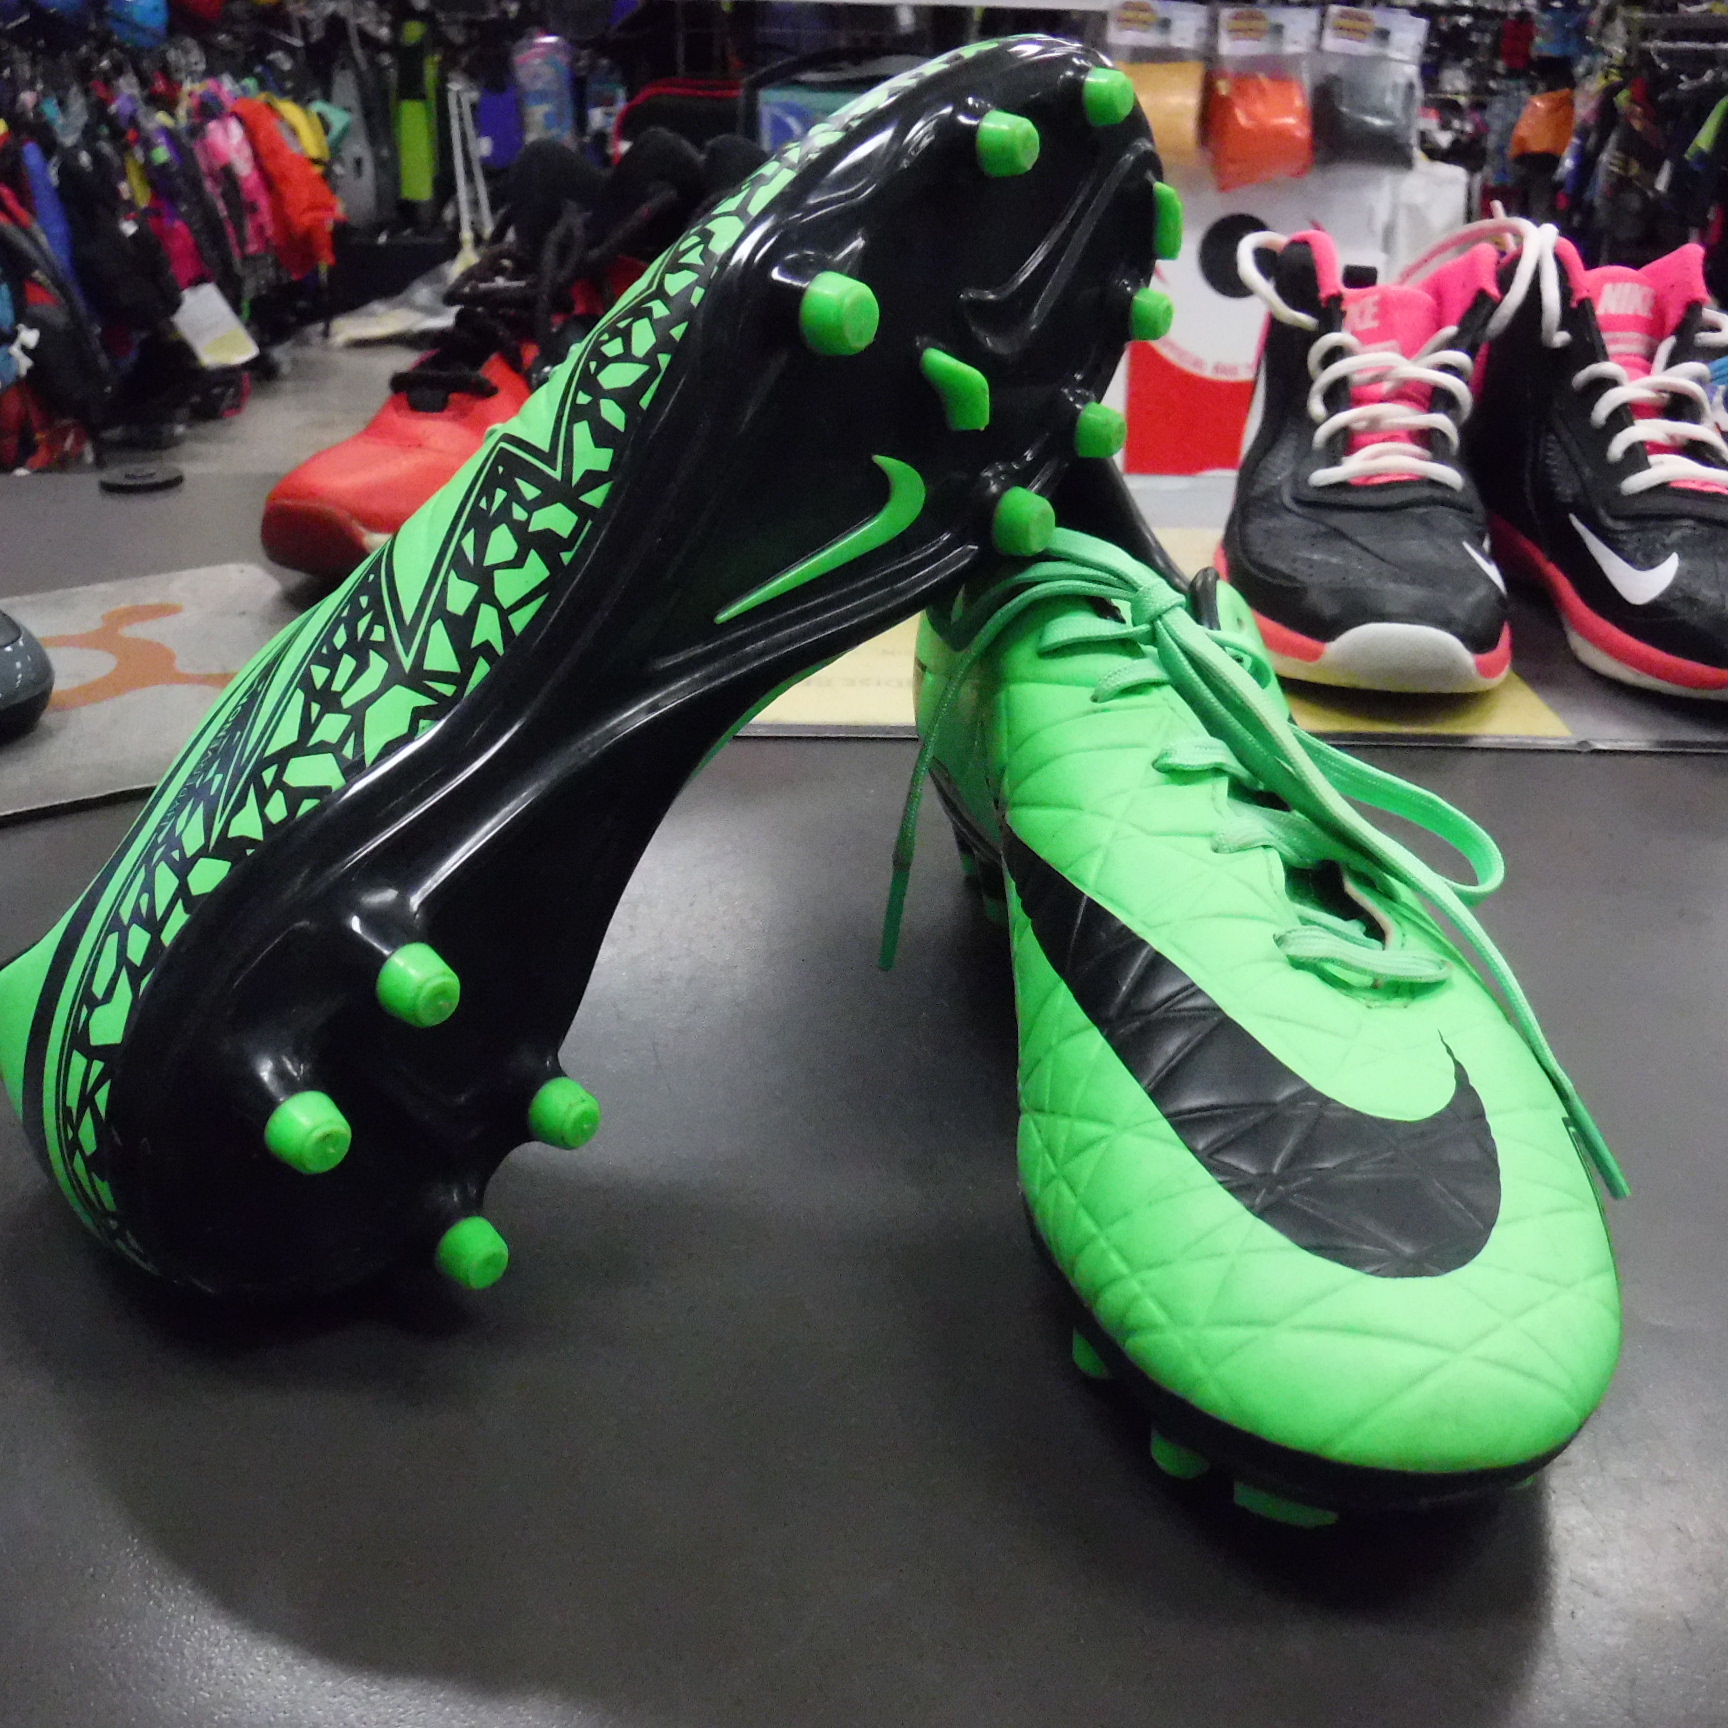 Used Nike Hypervenom Soccer Cleats Sz 6 